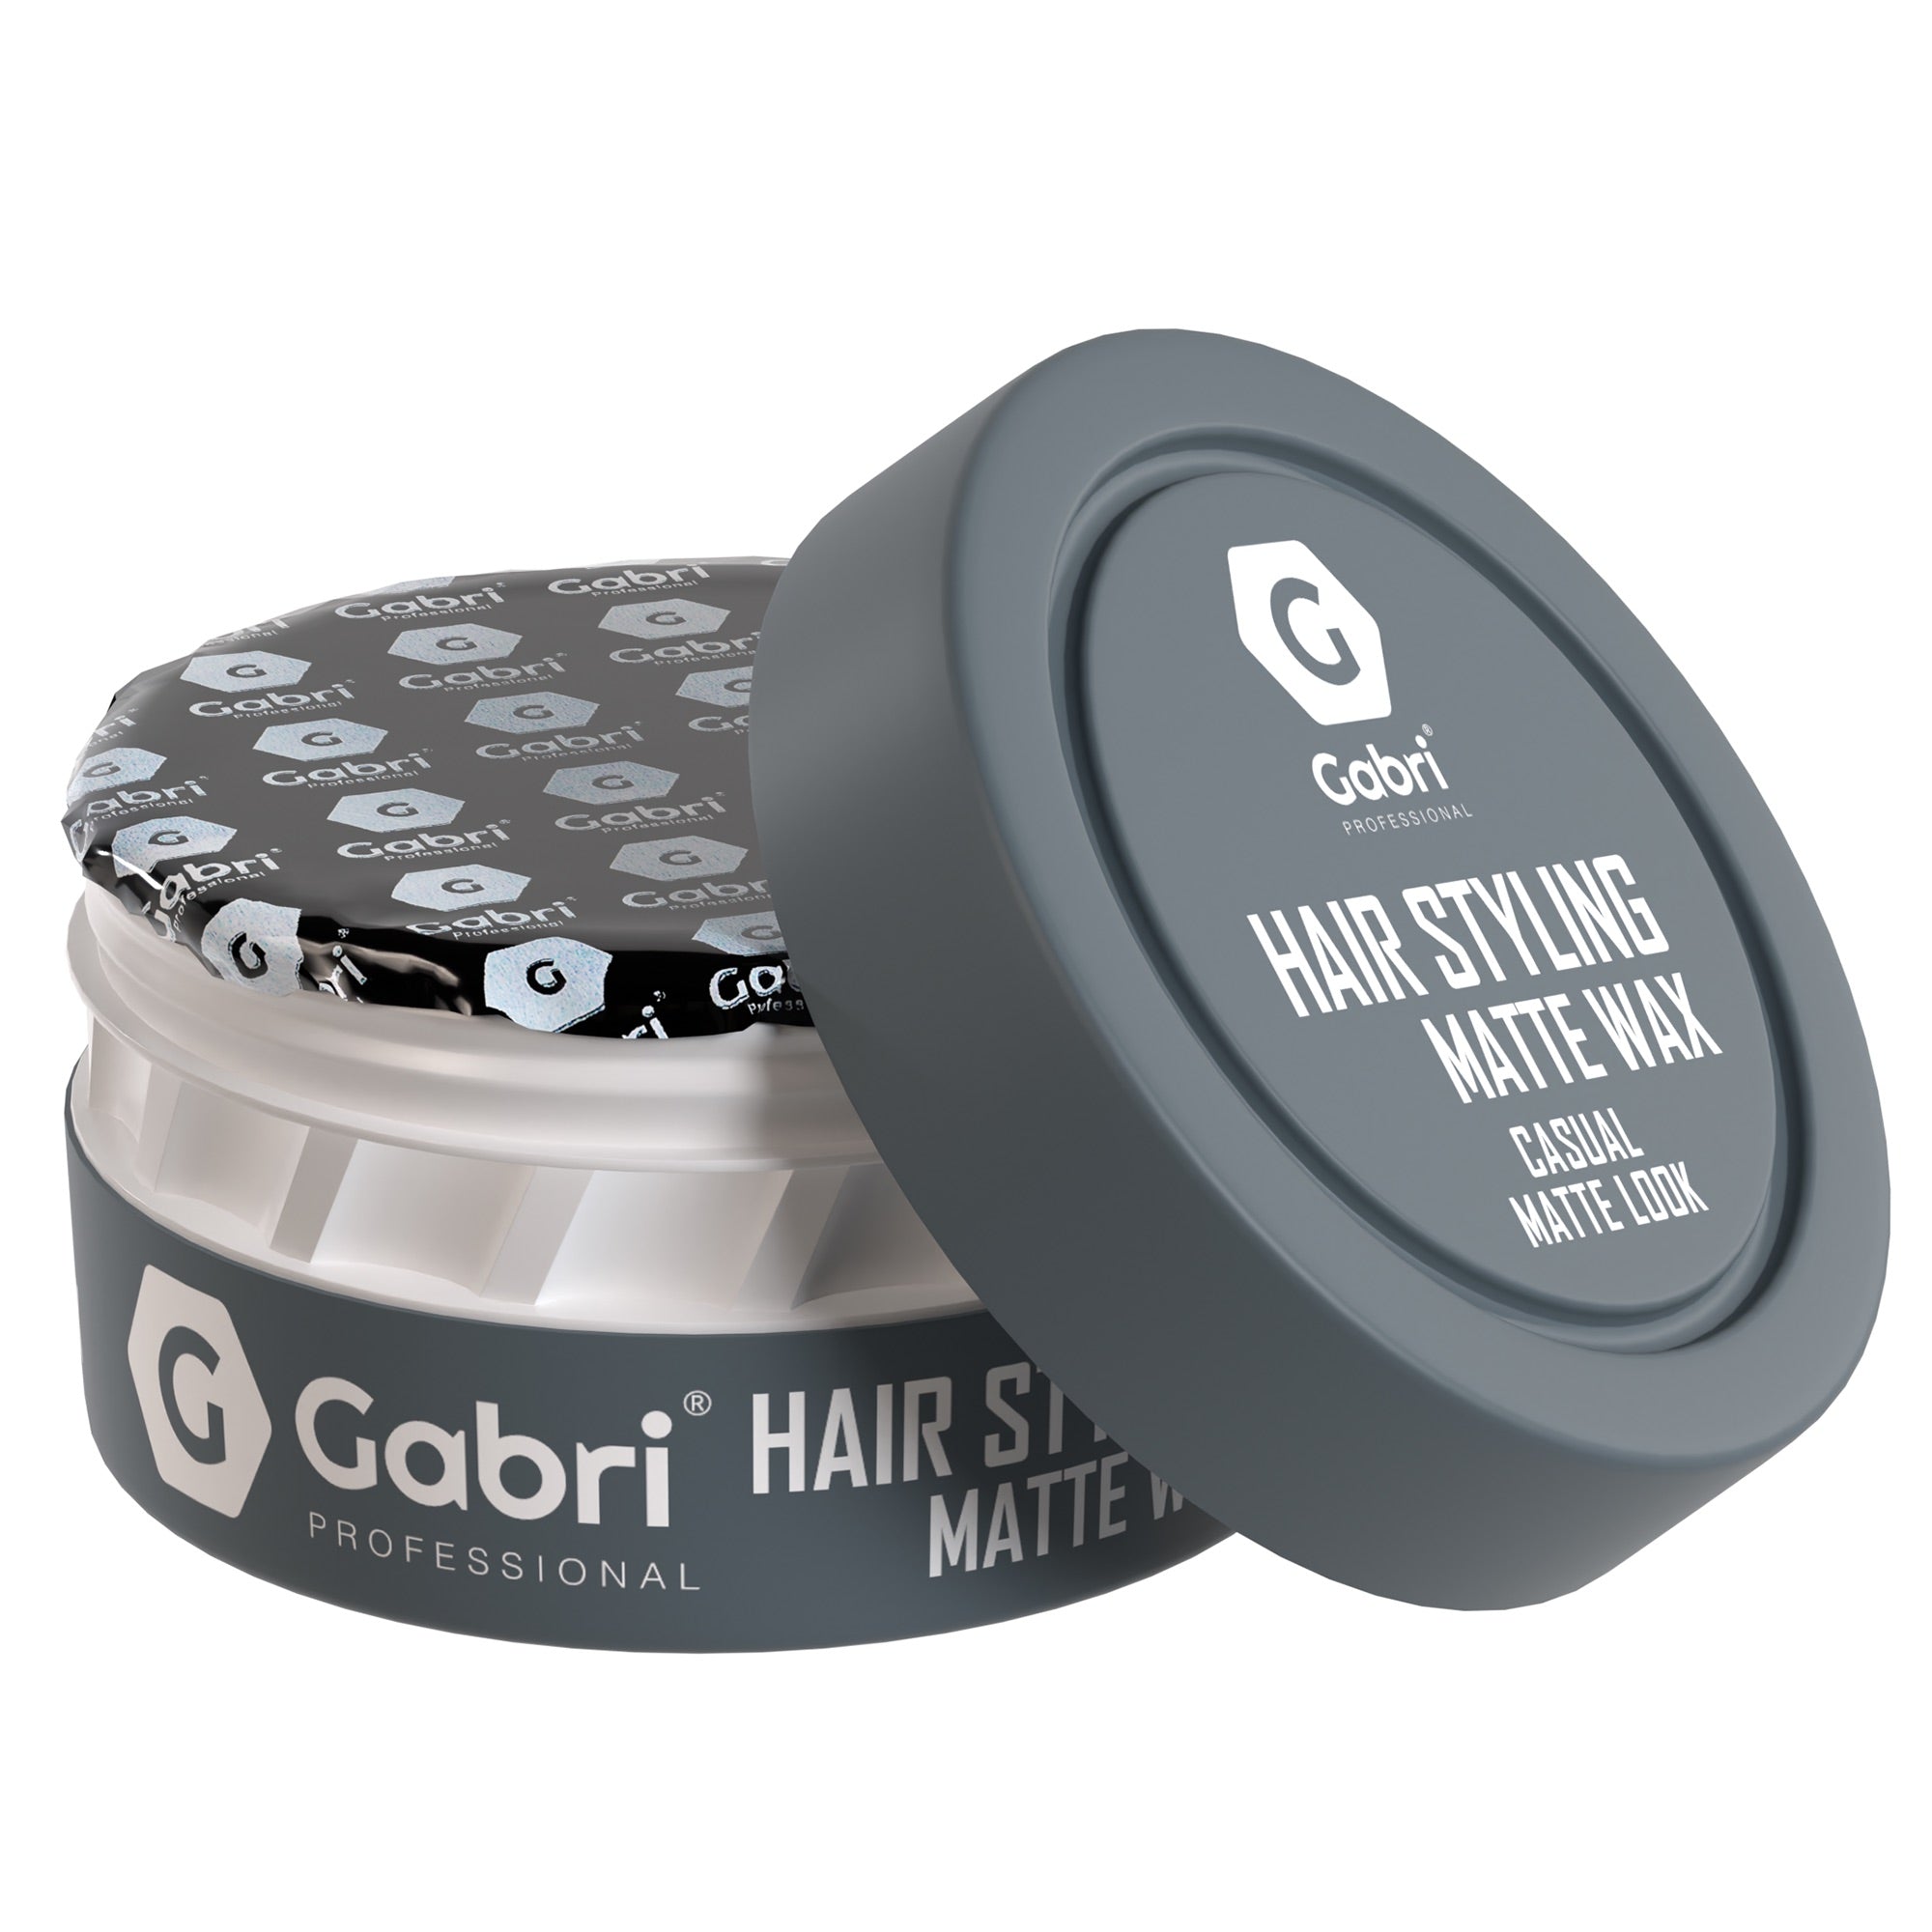 Gabri Professional - Hair Styling Wax Aqua Casual Matte Look 150ml